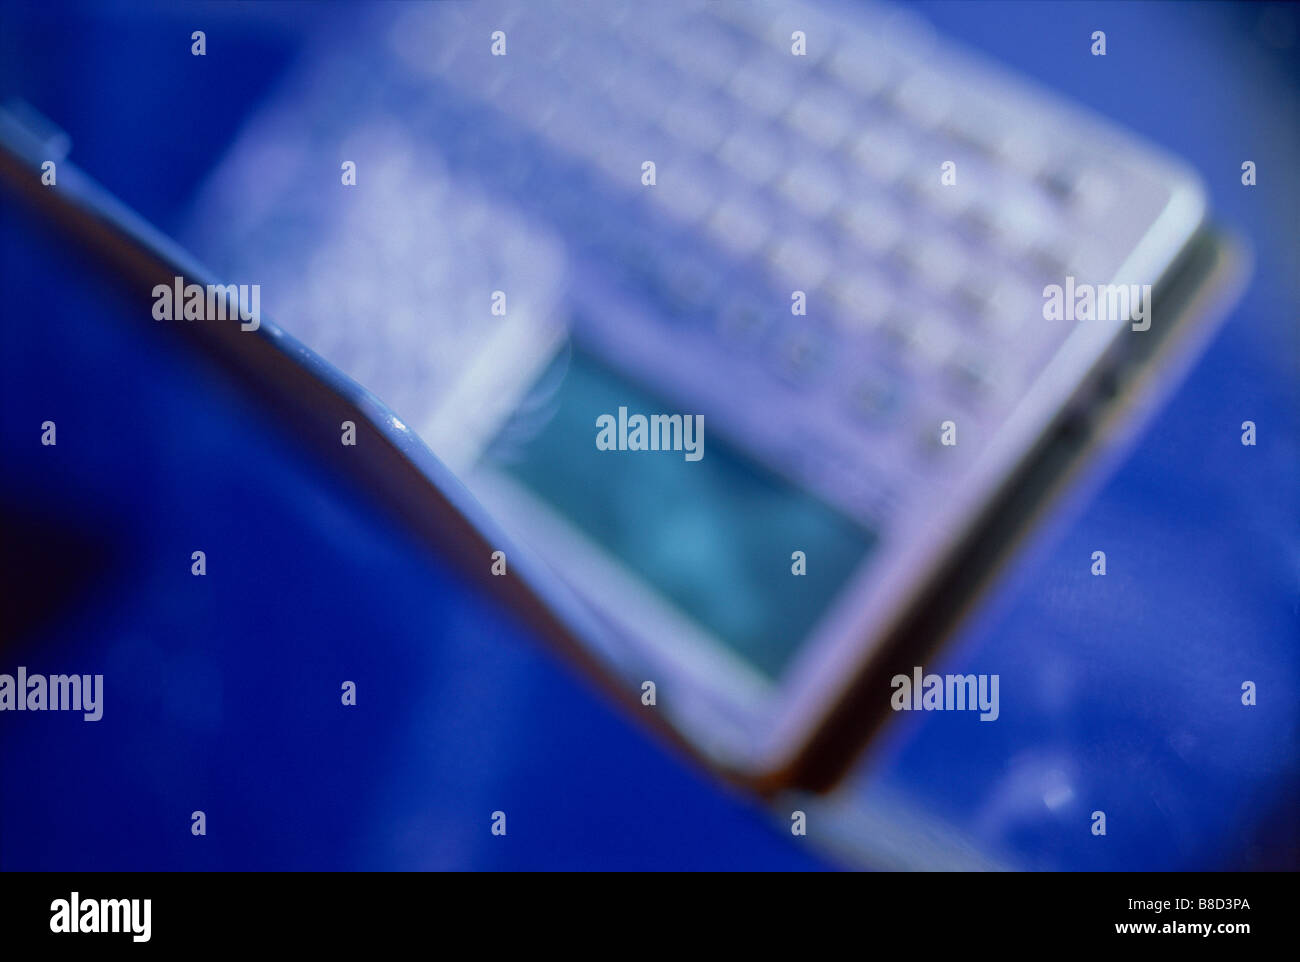 FV3253, Roman Konopka; Electronic Organizer, Blue Background Stock Photo